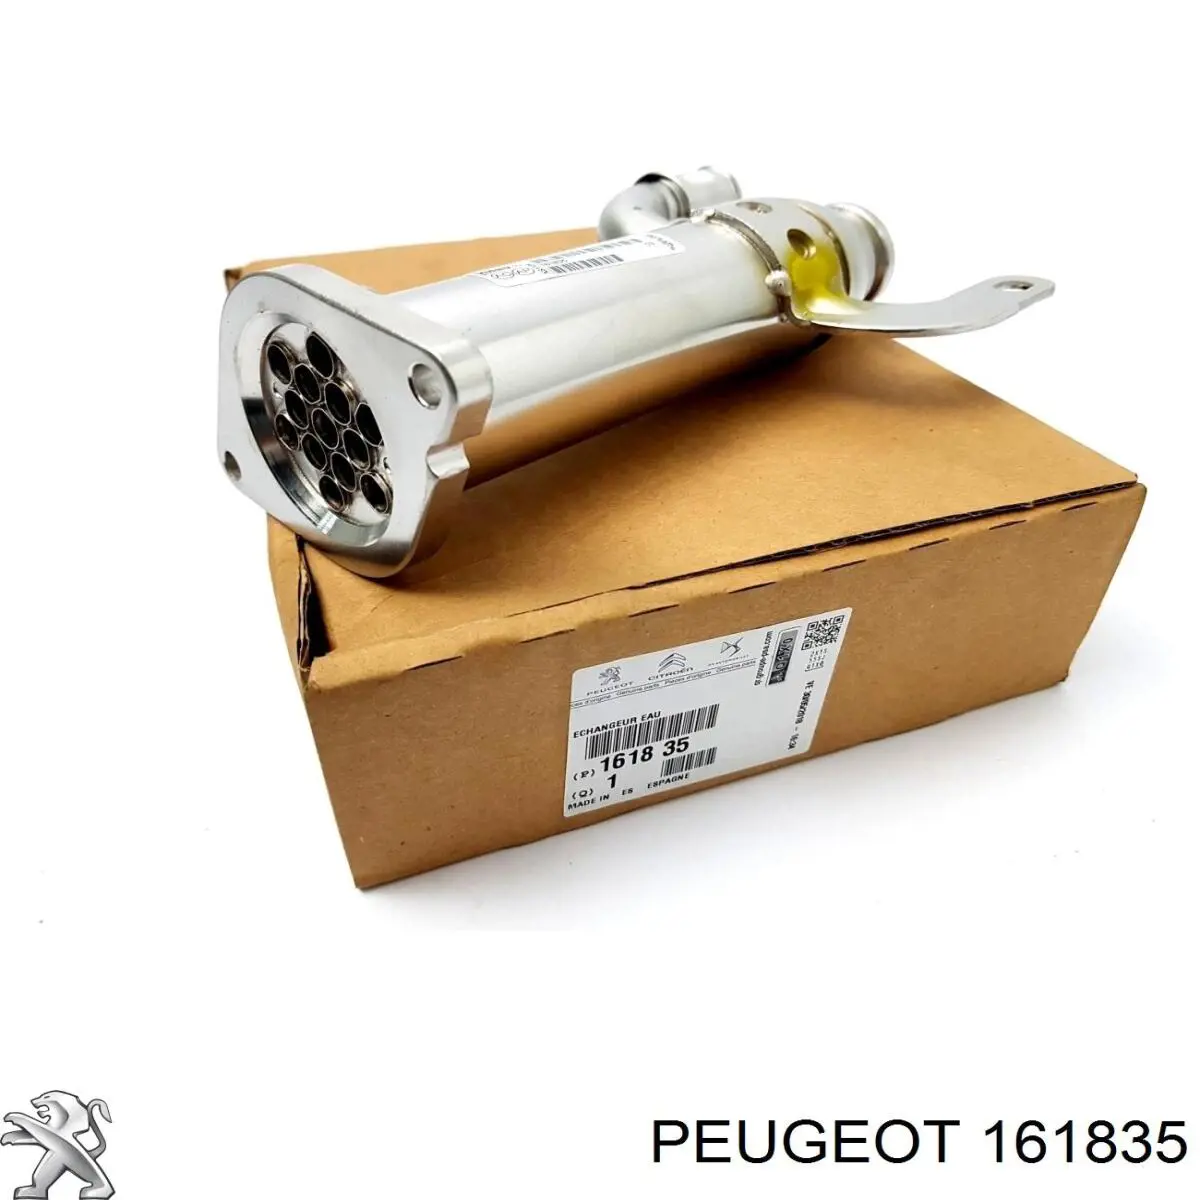 Enfriador EGR de recirculación de gases de escape 161835 Peugeot/Citroen